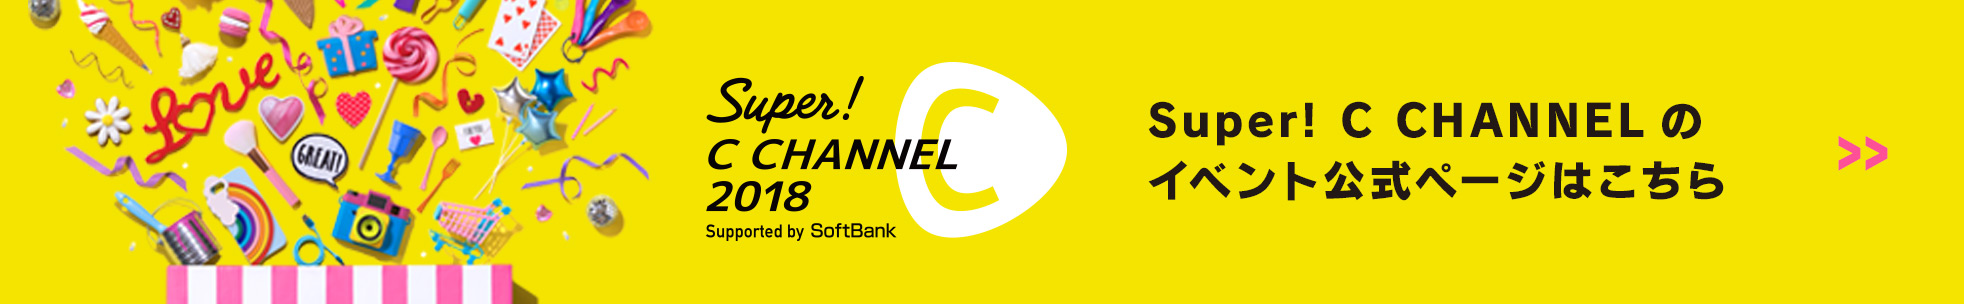 Super! C CHANNEL 2018　Supported by SoftBank　イベント公式ページはこちら